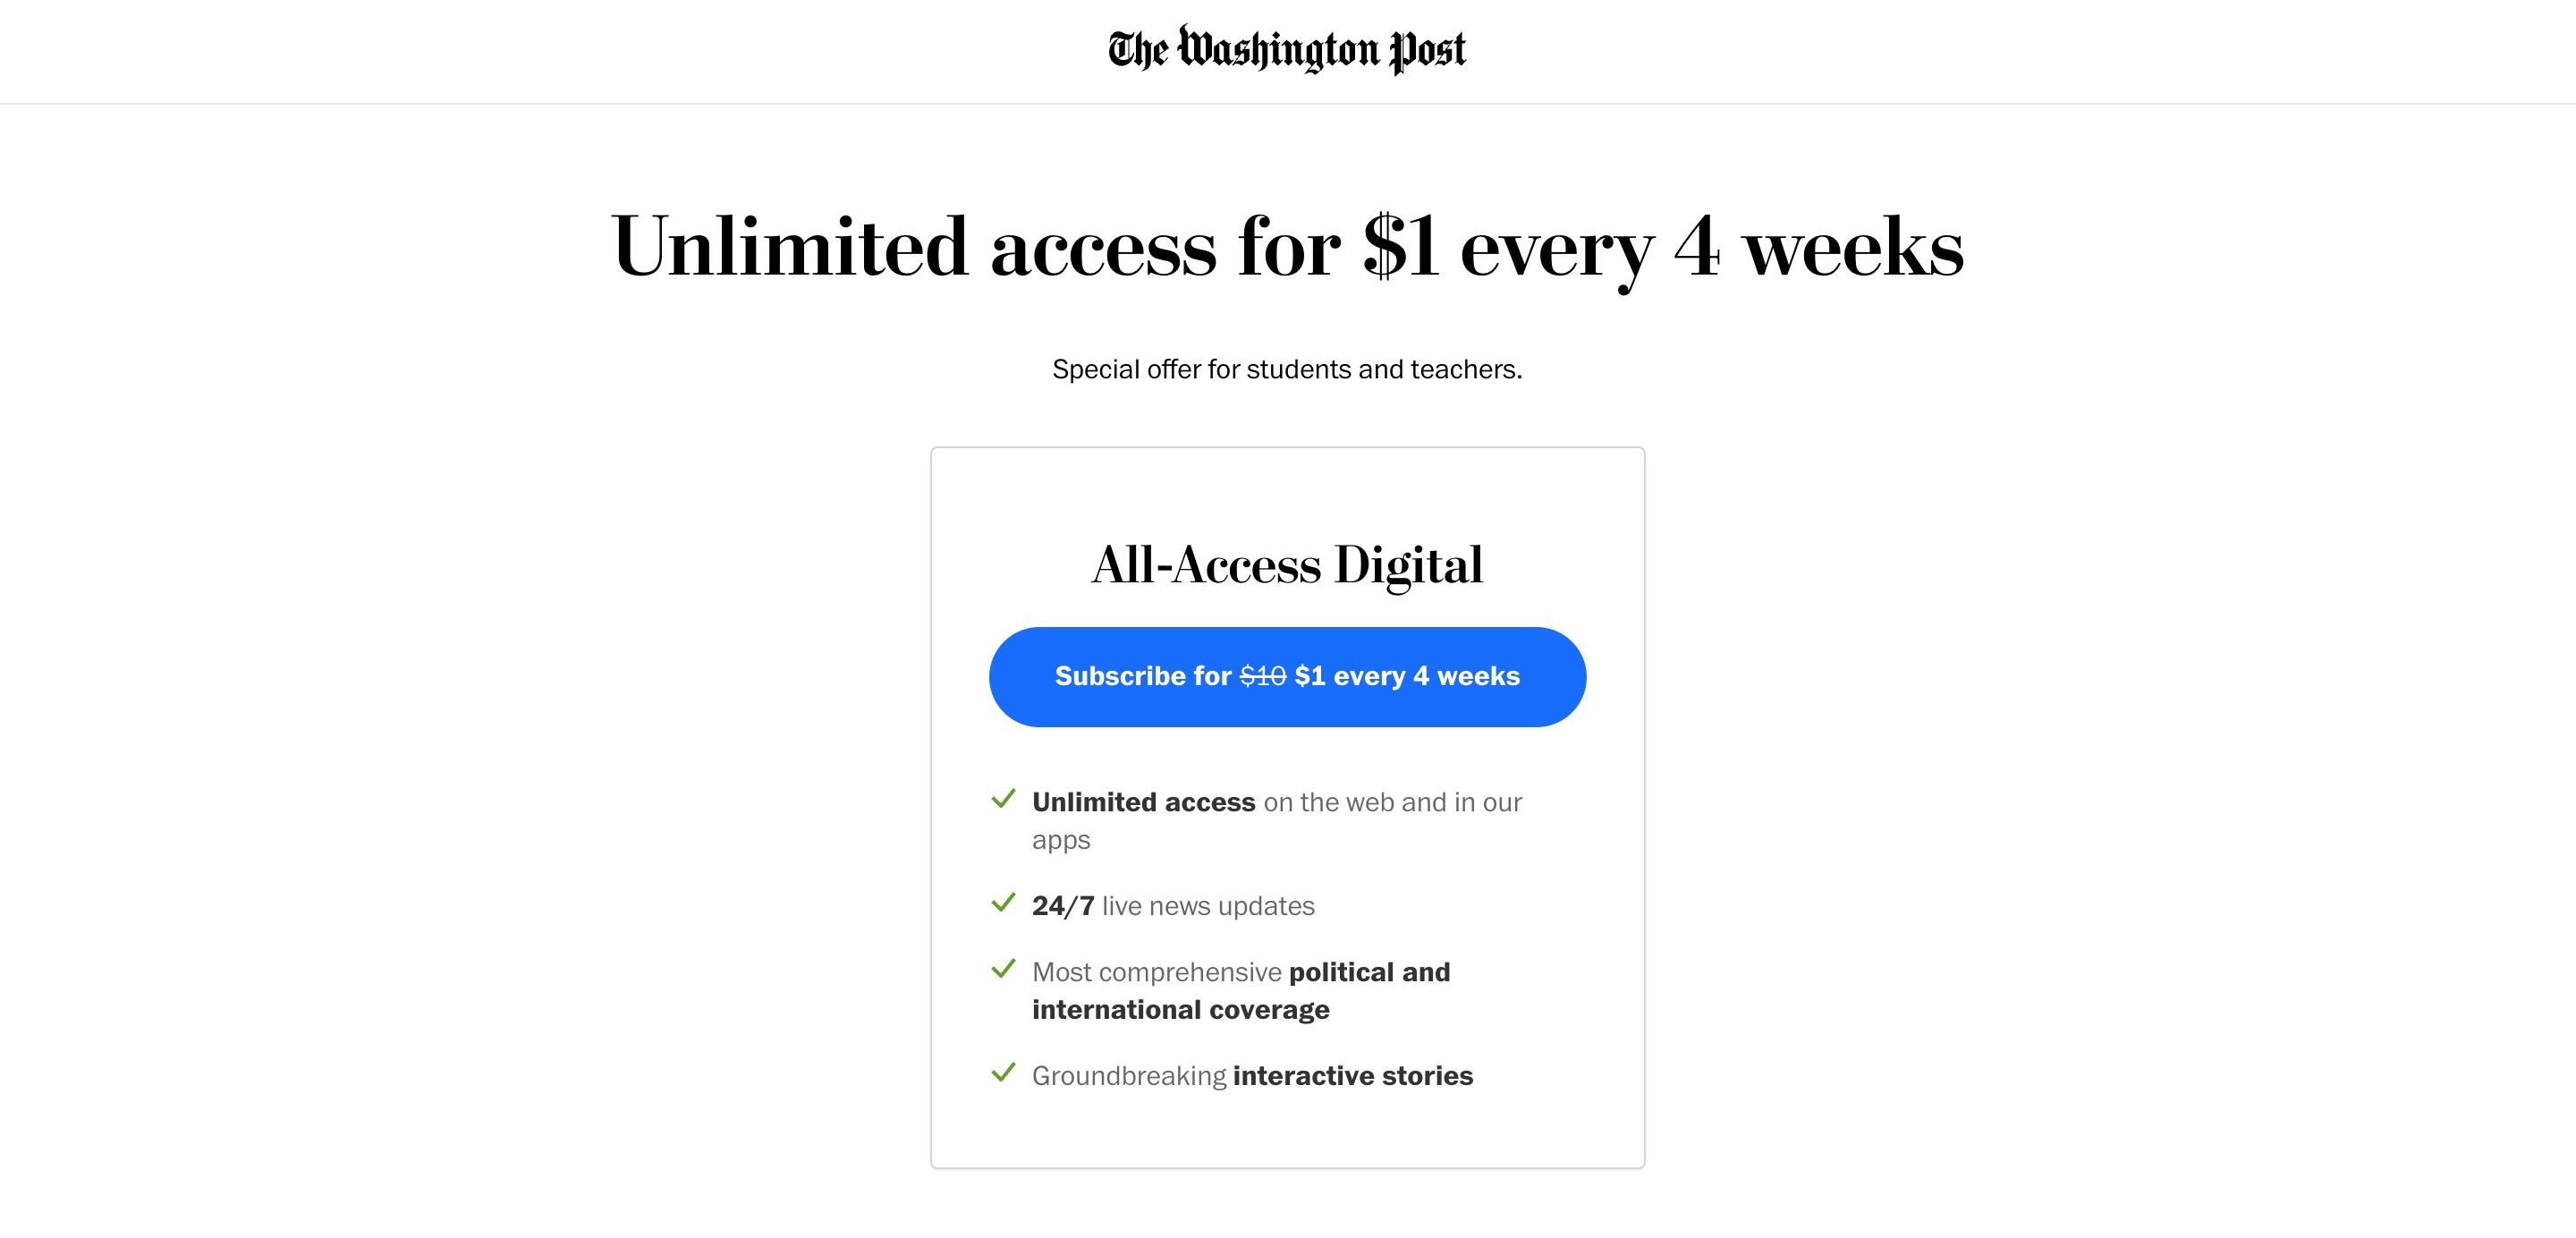 The Washington Post's education offer